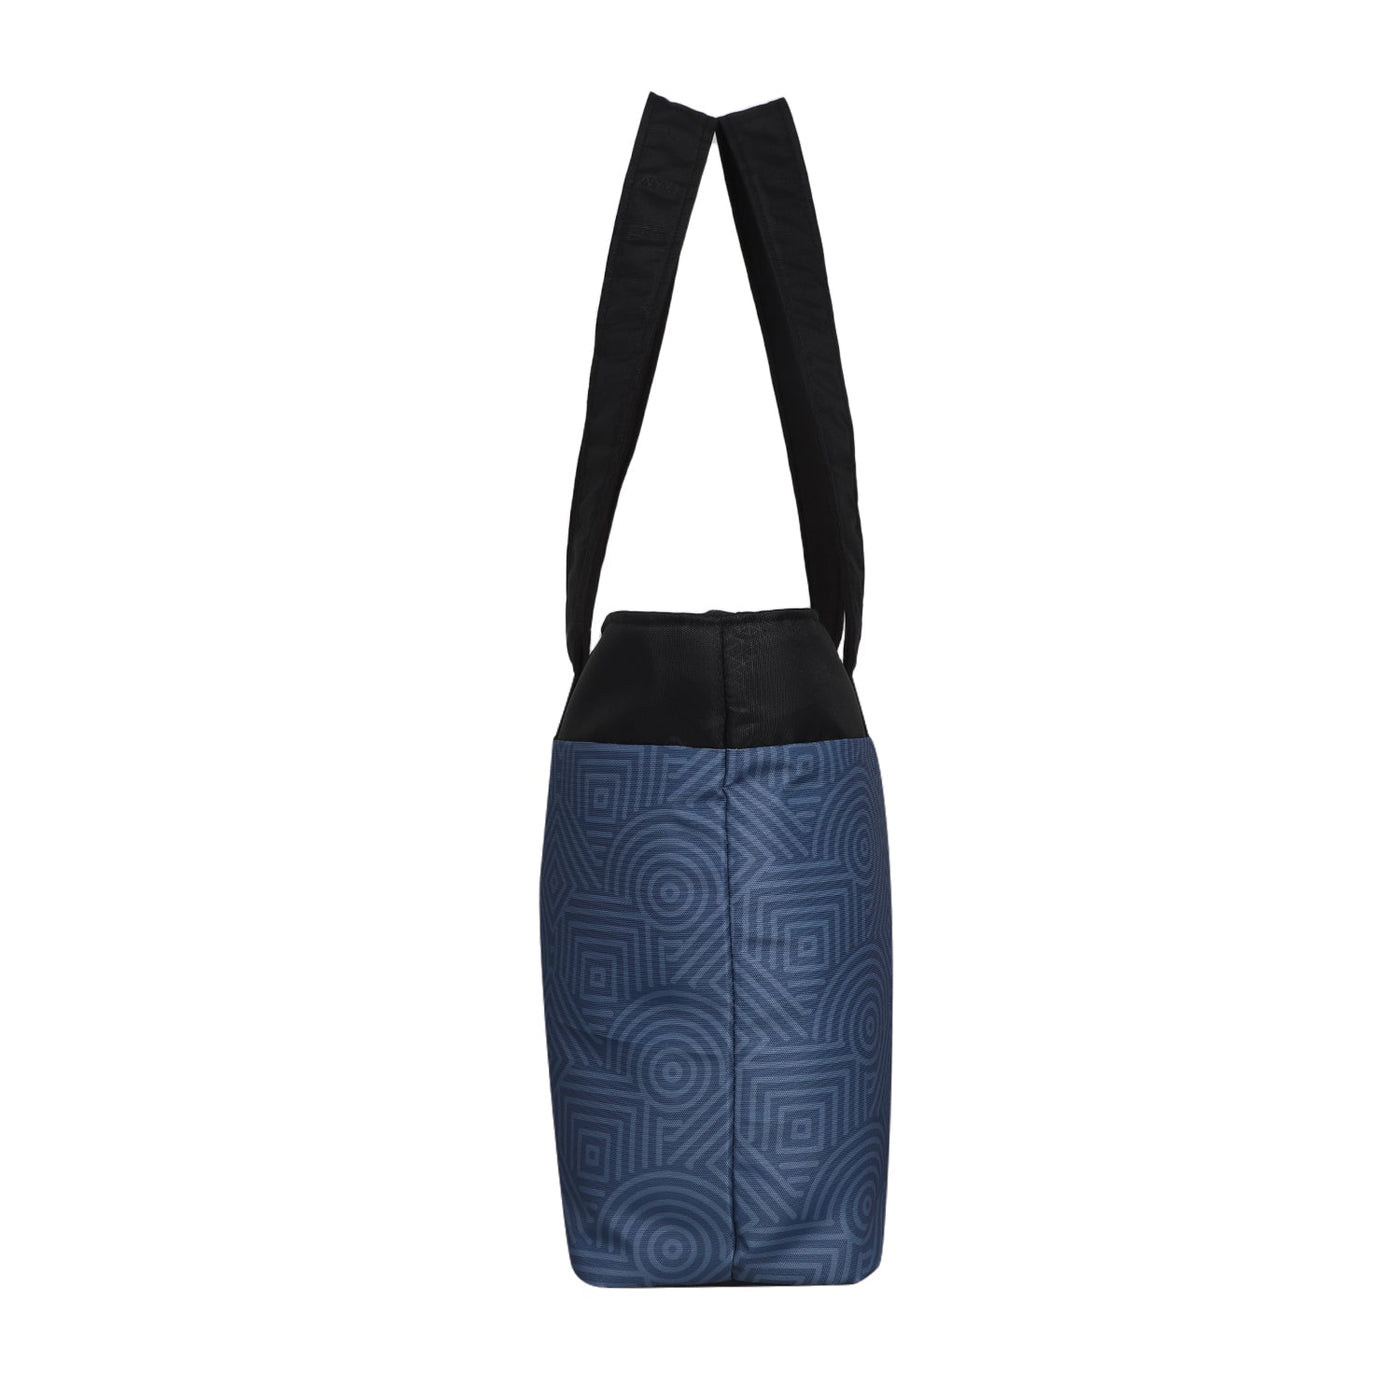 Arctic Fox 15.6" Laptop Tote Bag For Women Work Bag Lattice (Dark Denim)